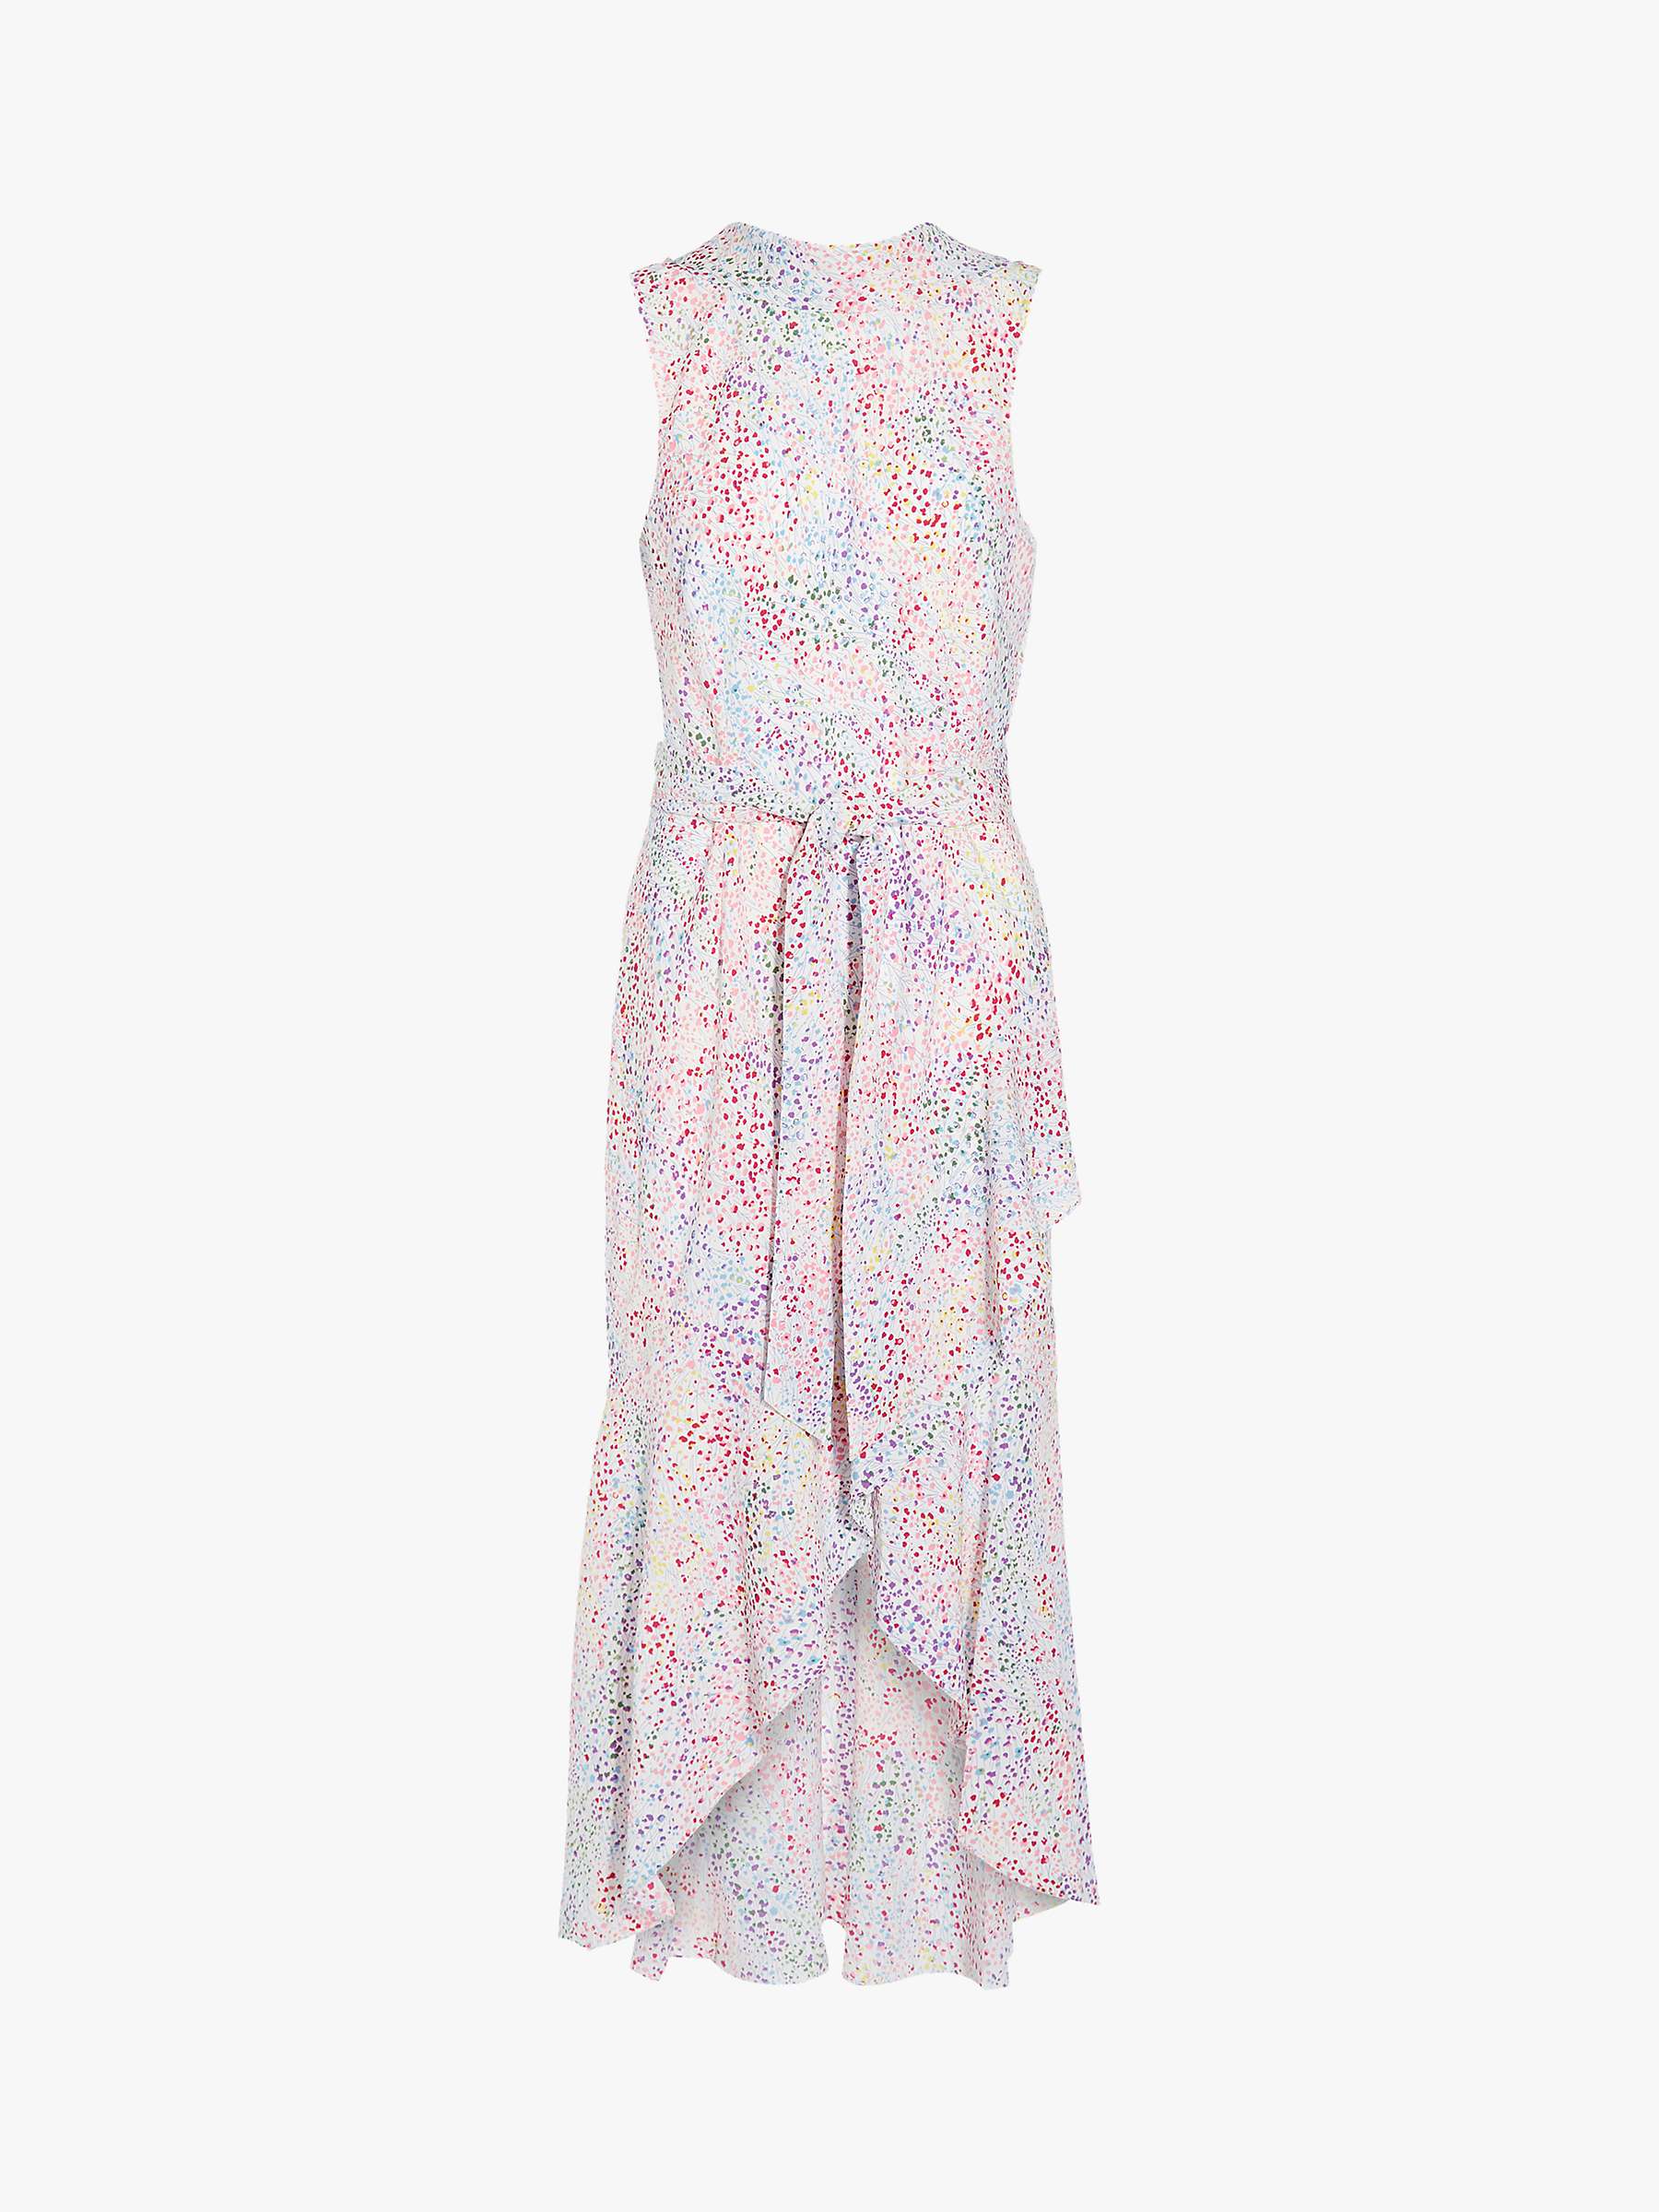 Buy Adrianna Papell Polka Dot Print Bias Cut Dress, Pink/Multi Online at johnlewis.com